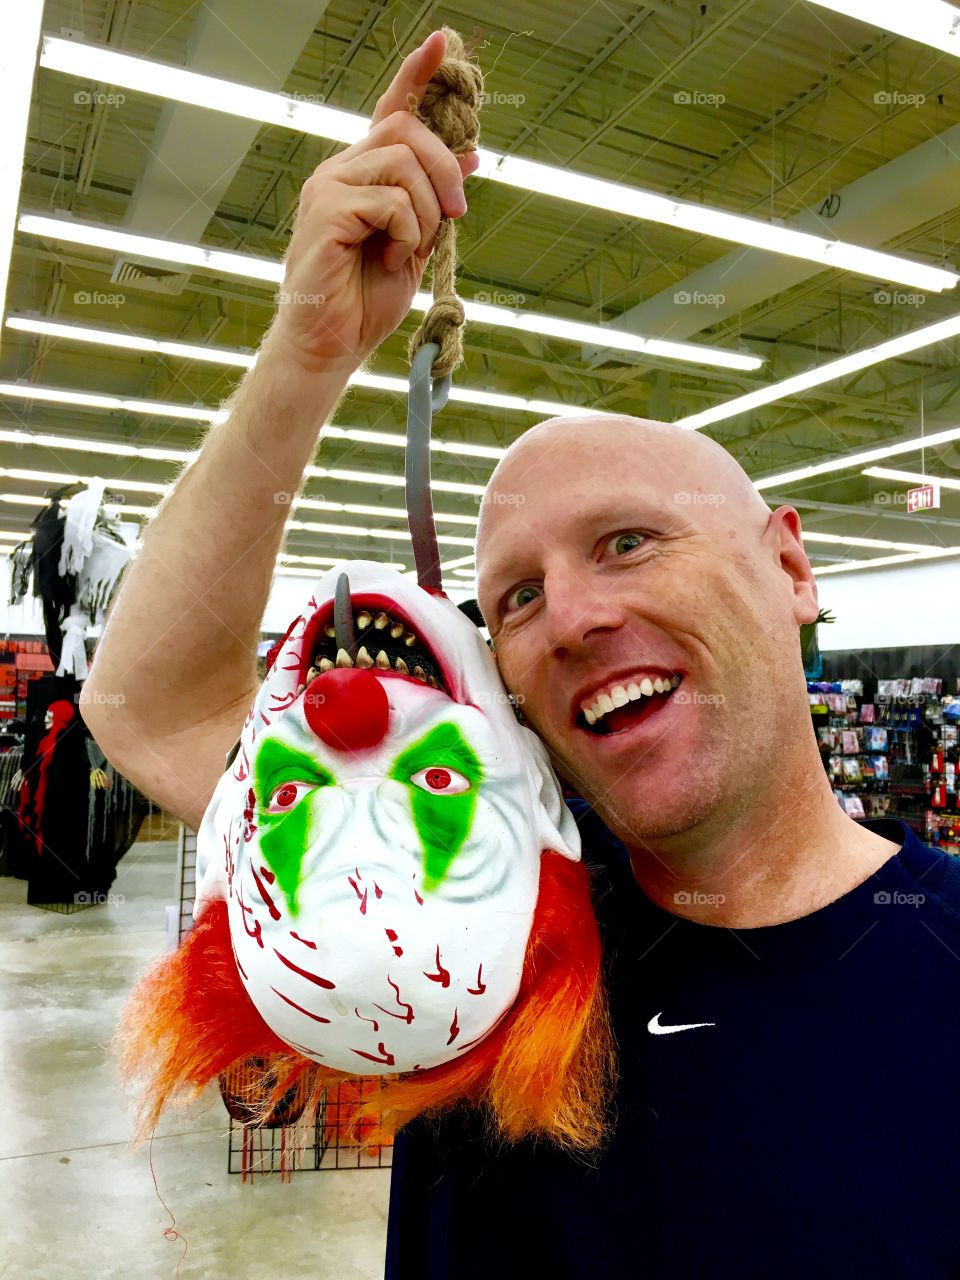 Clown head selfie